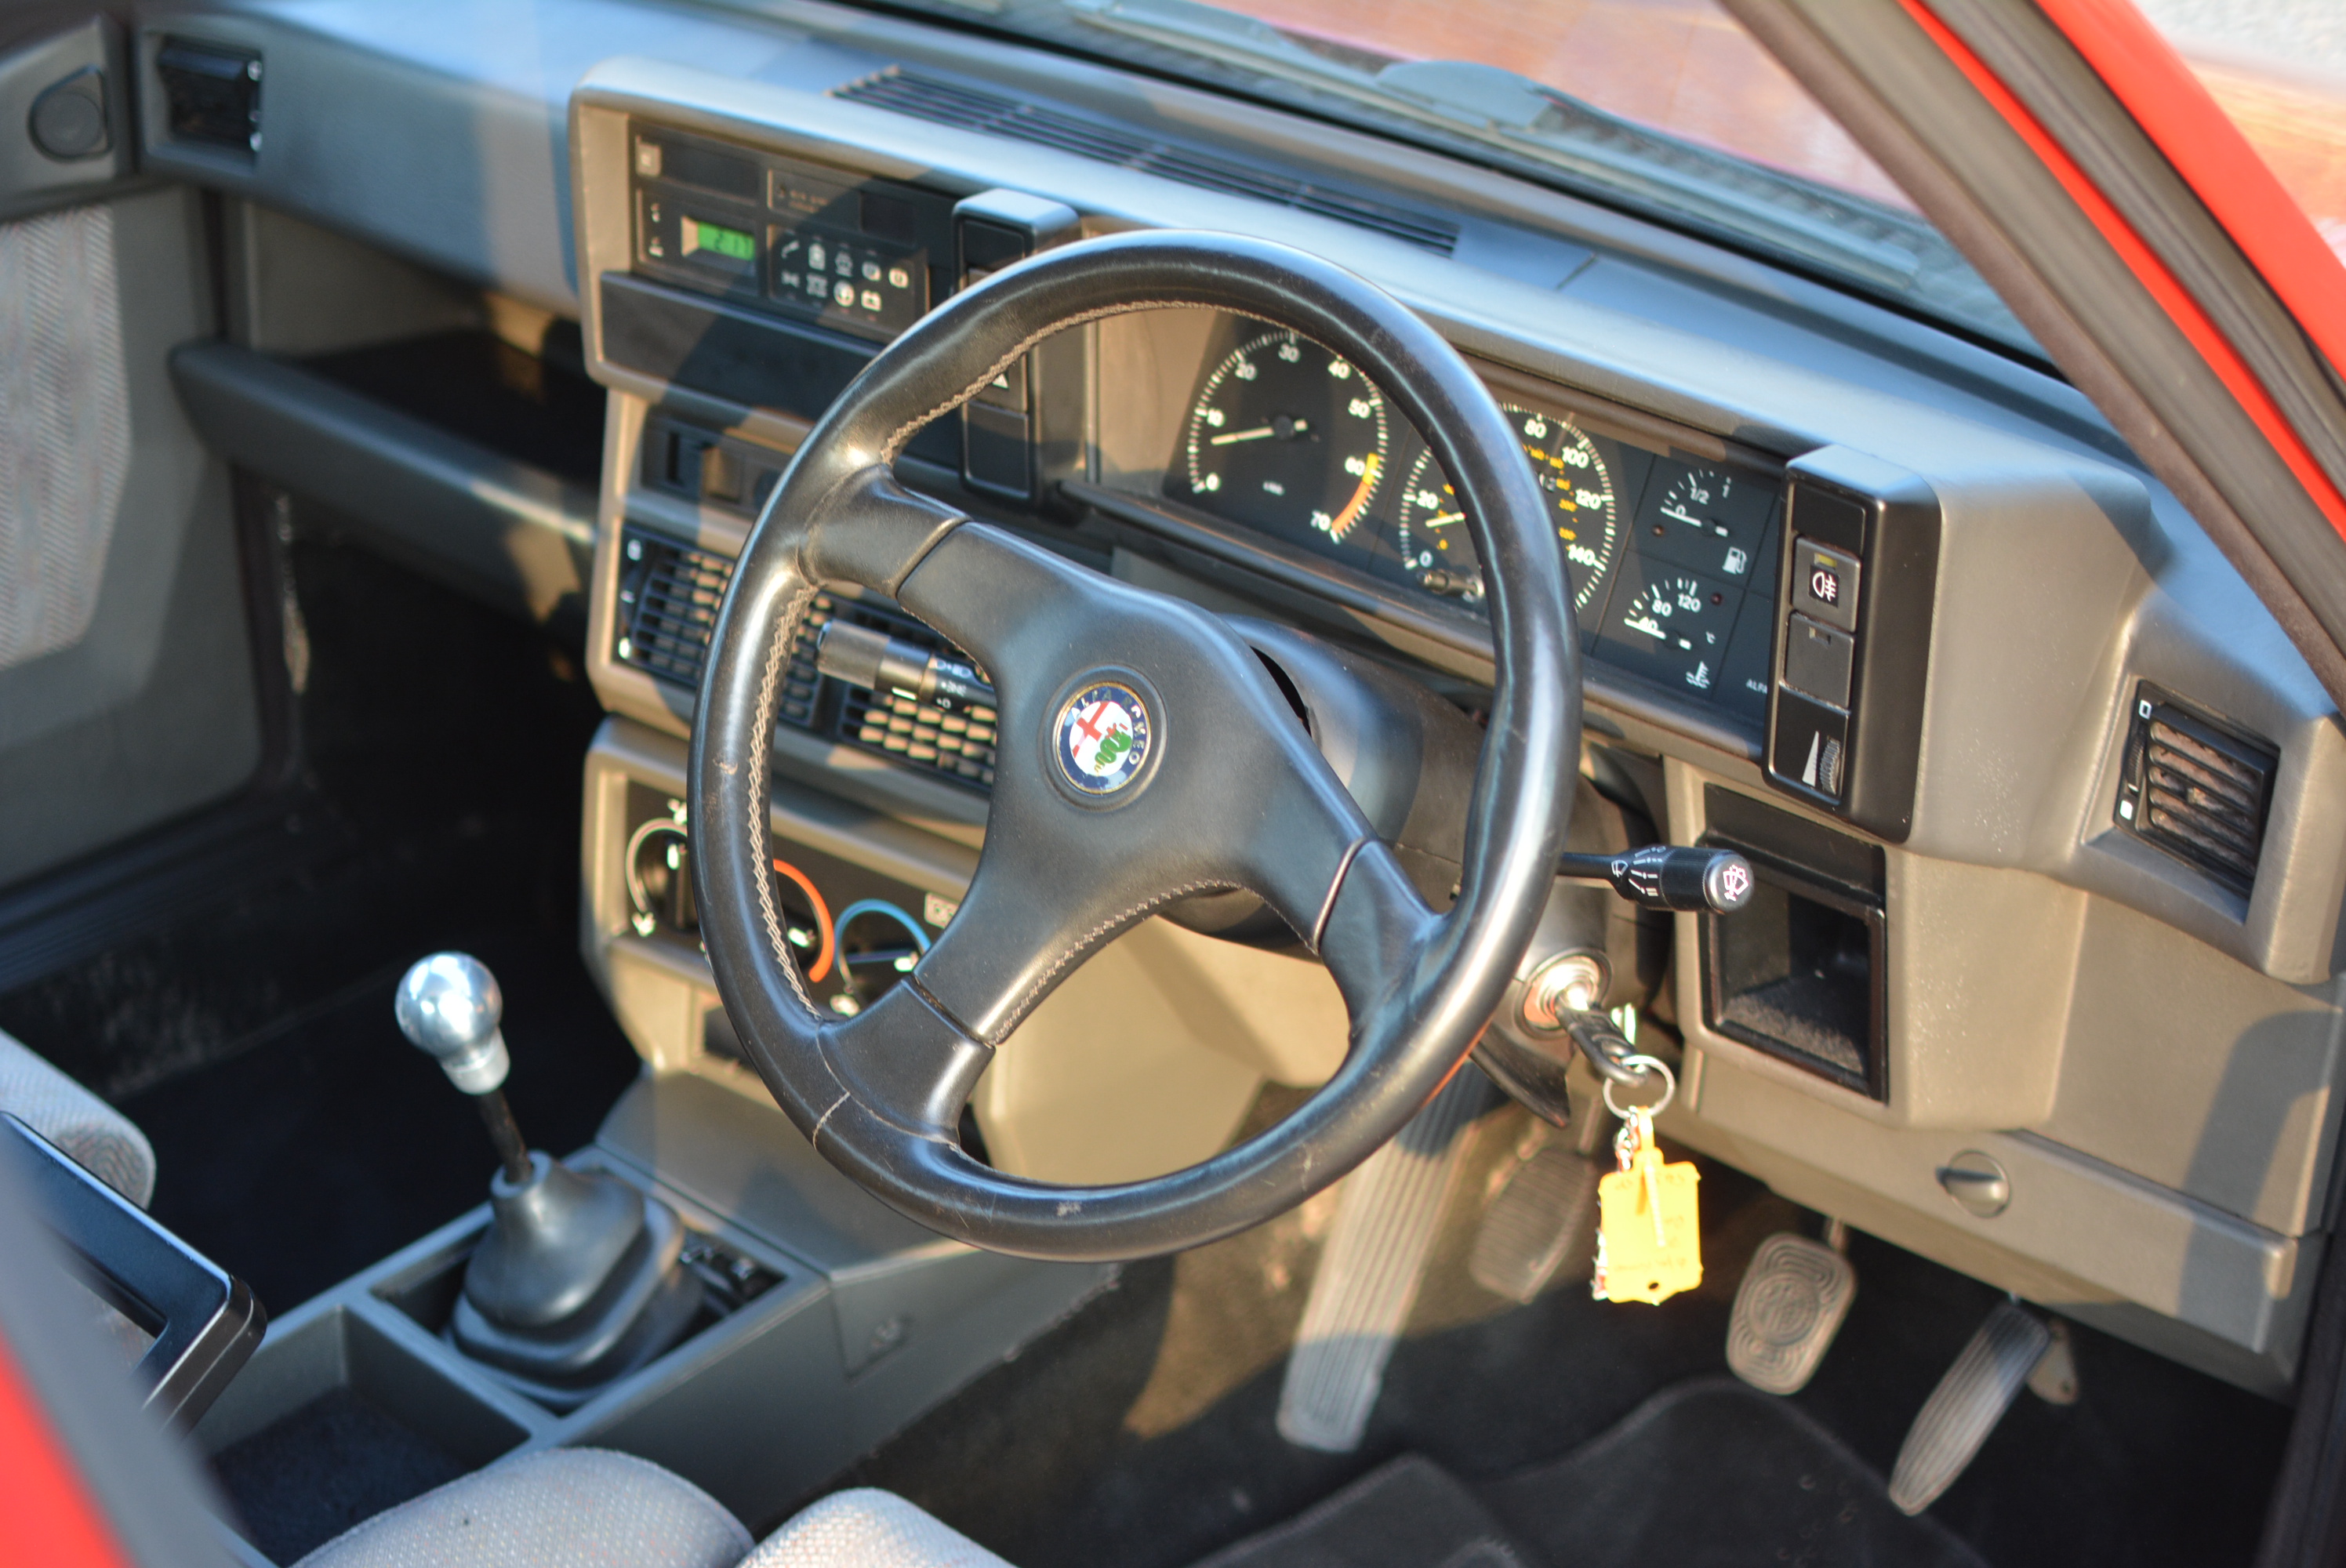 Alfa Romeo 75 